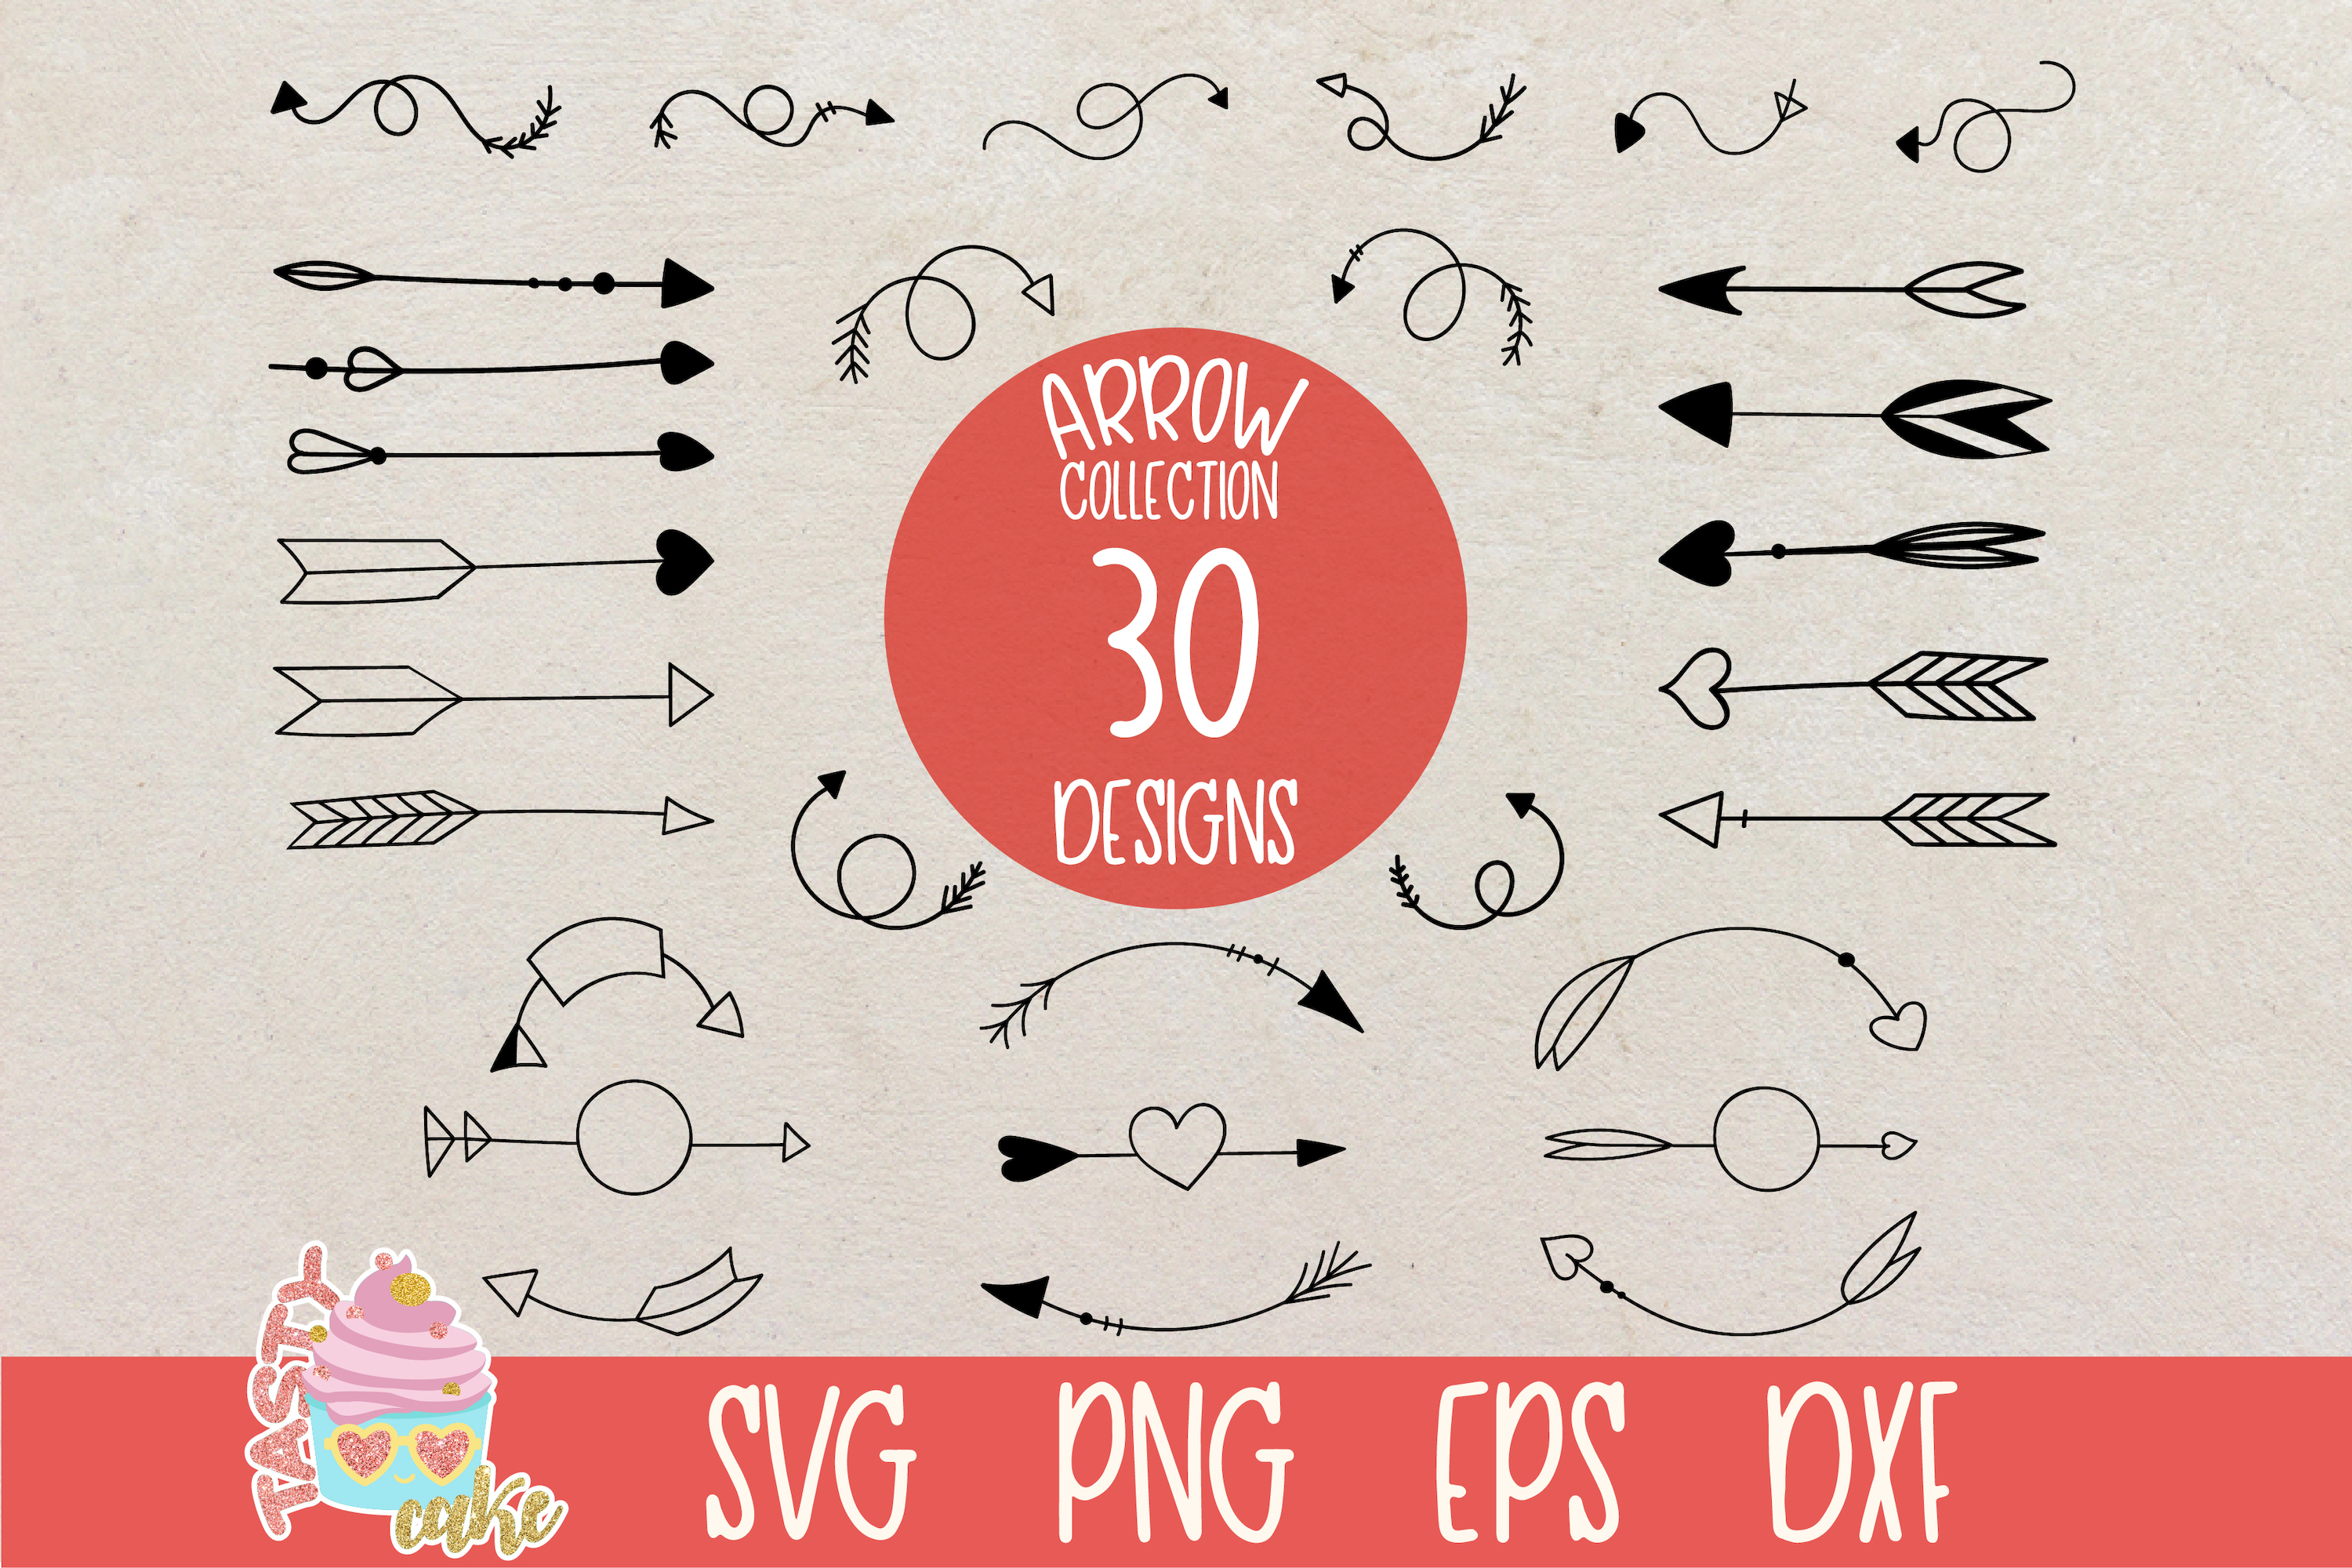 Download Arrow Bundle of 30|SVG PNG EPS DXF | Arrow Collection SVG